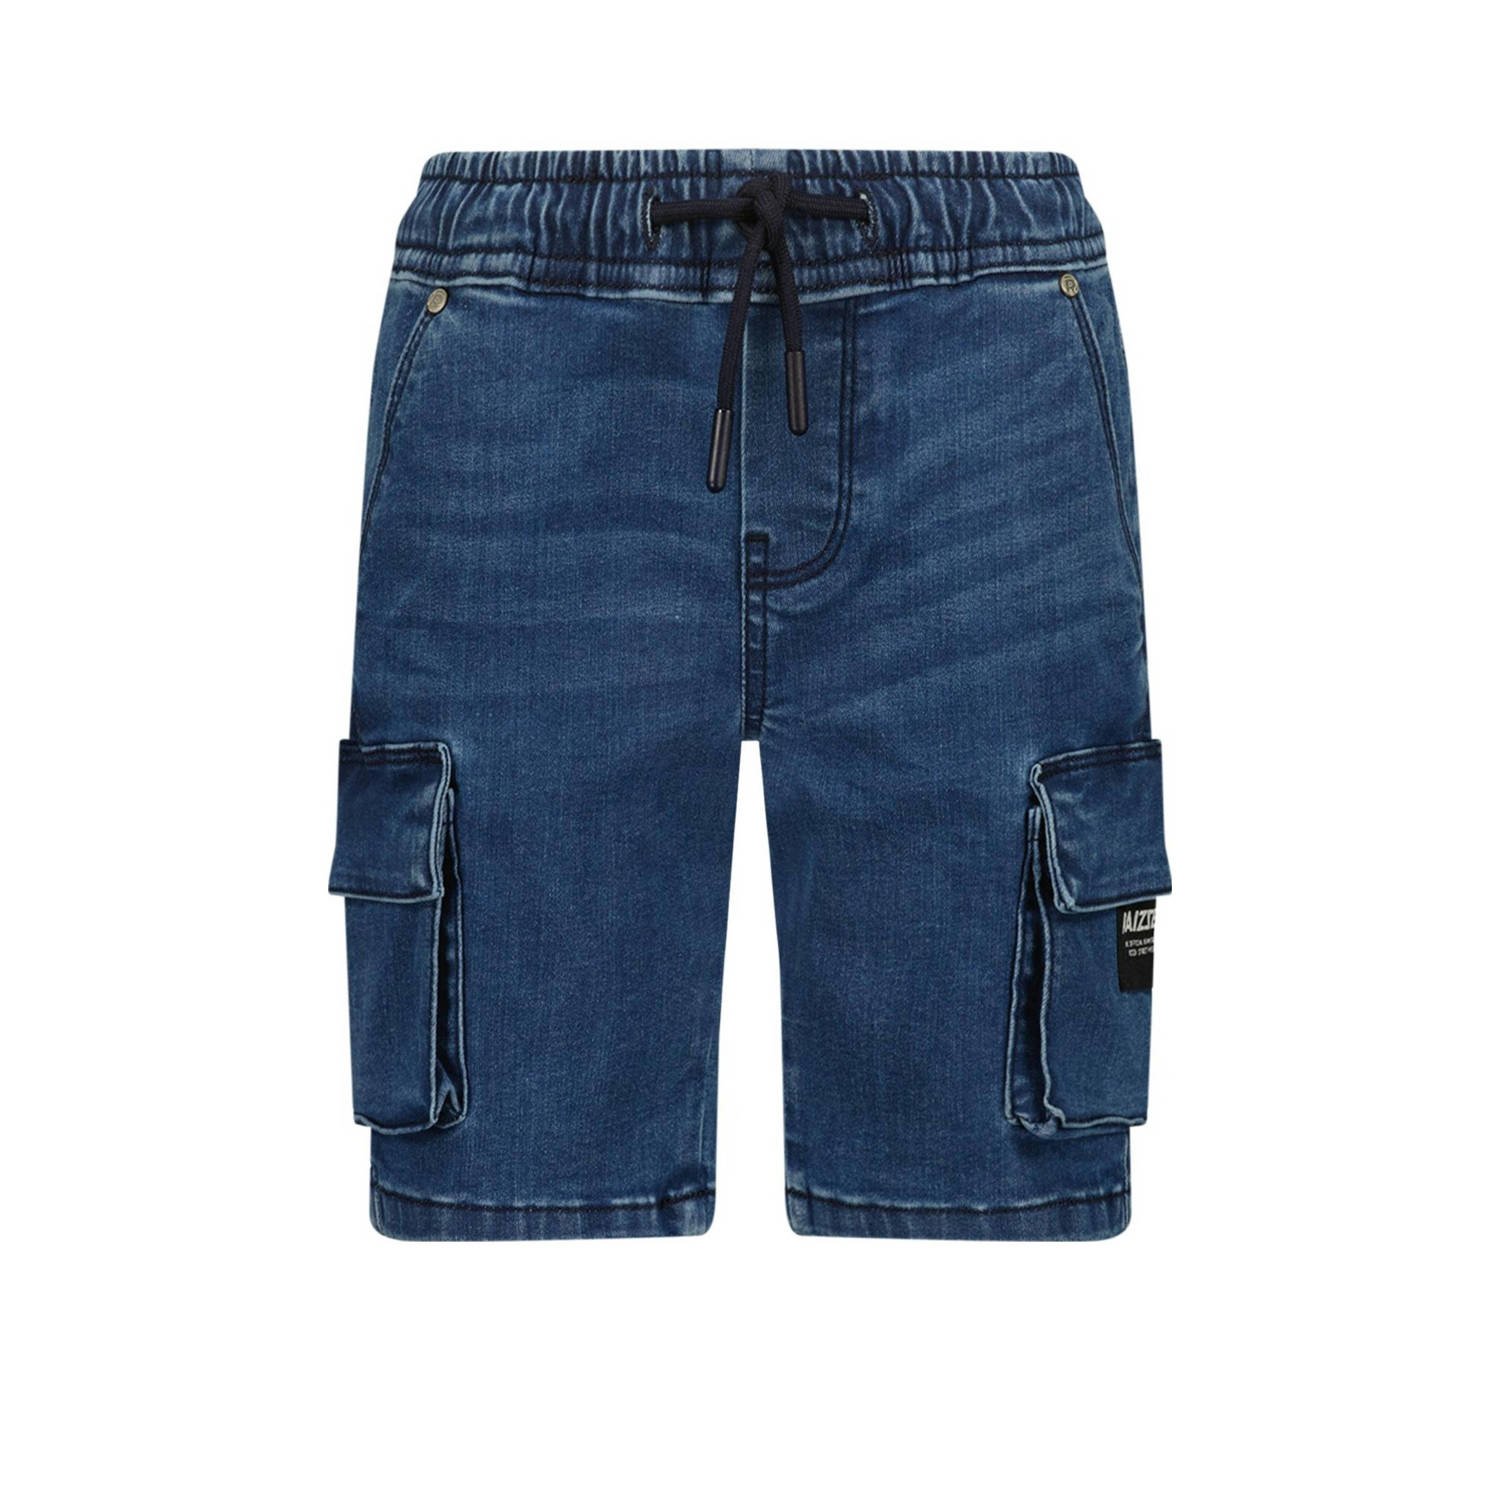 Raizzed jeans Seoul blauw Korte broek Jongens Stretchkatoen Effen 128